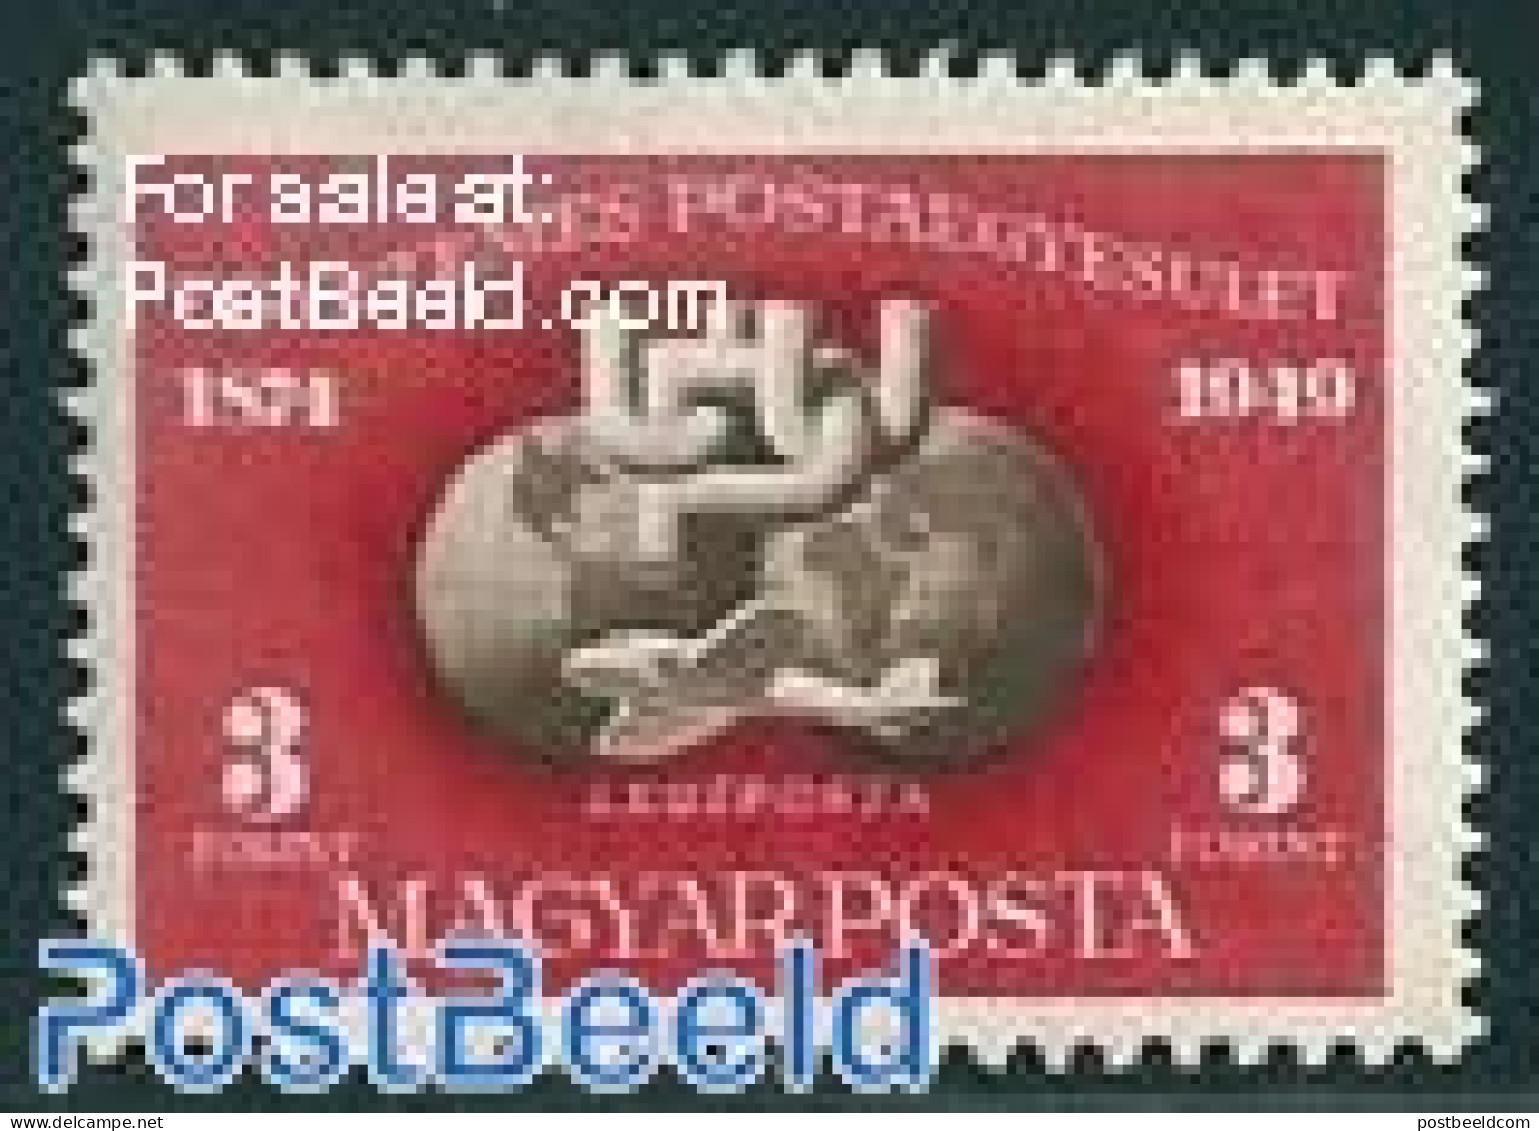 Hungary 1950 75 Years UPU 1V, Mint NH, U.P.U. - Unused Stamps